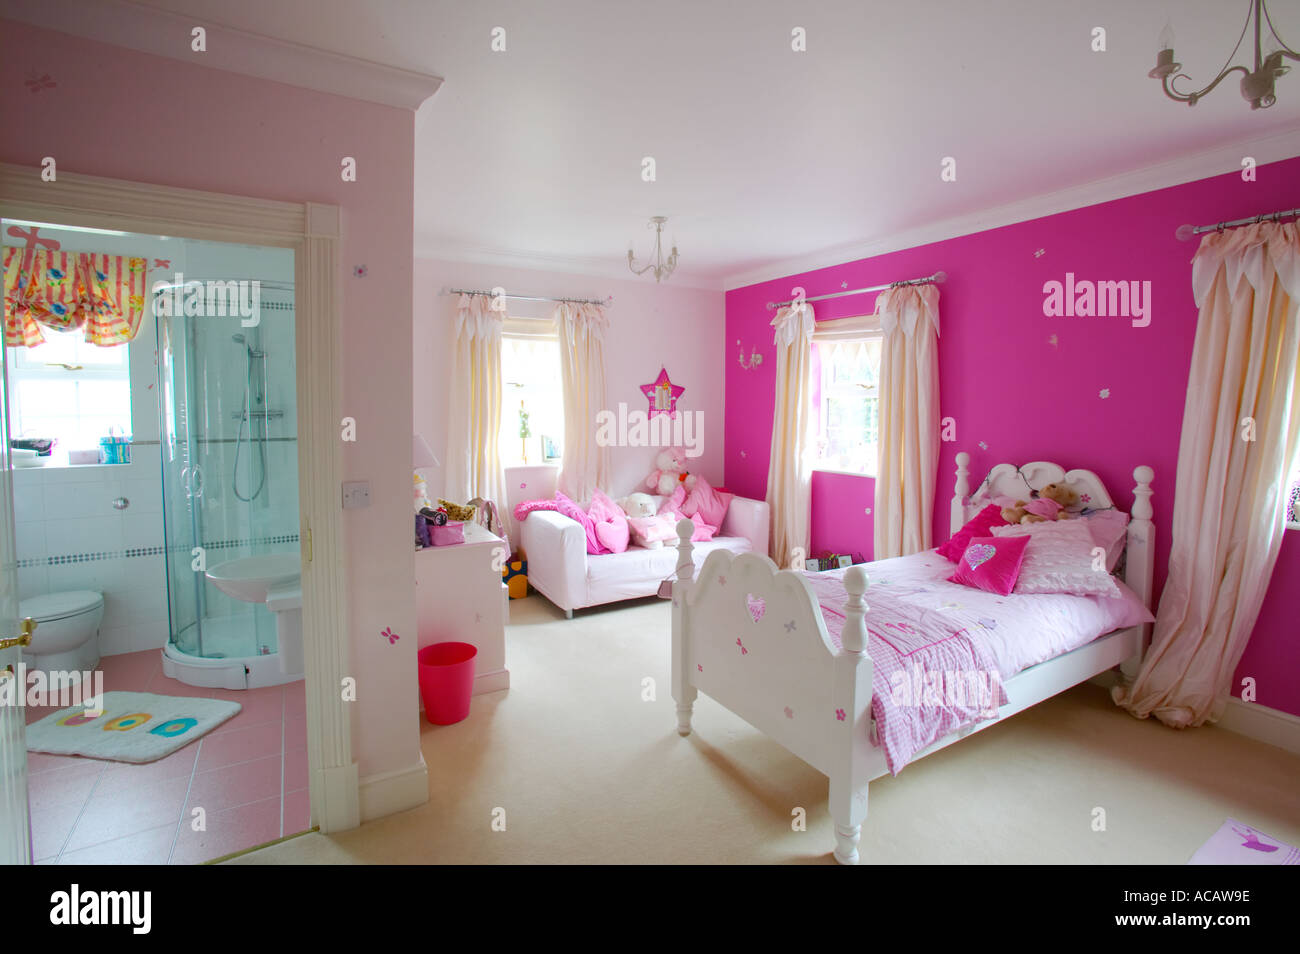 Camera per bambino di casa grande con bagno en suite facilities Foto Stock